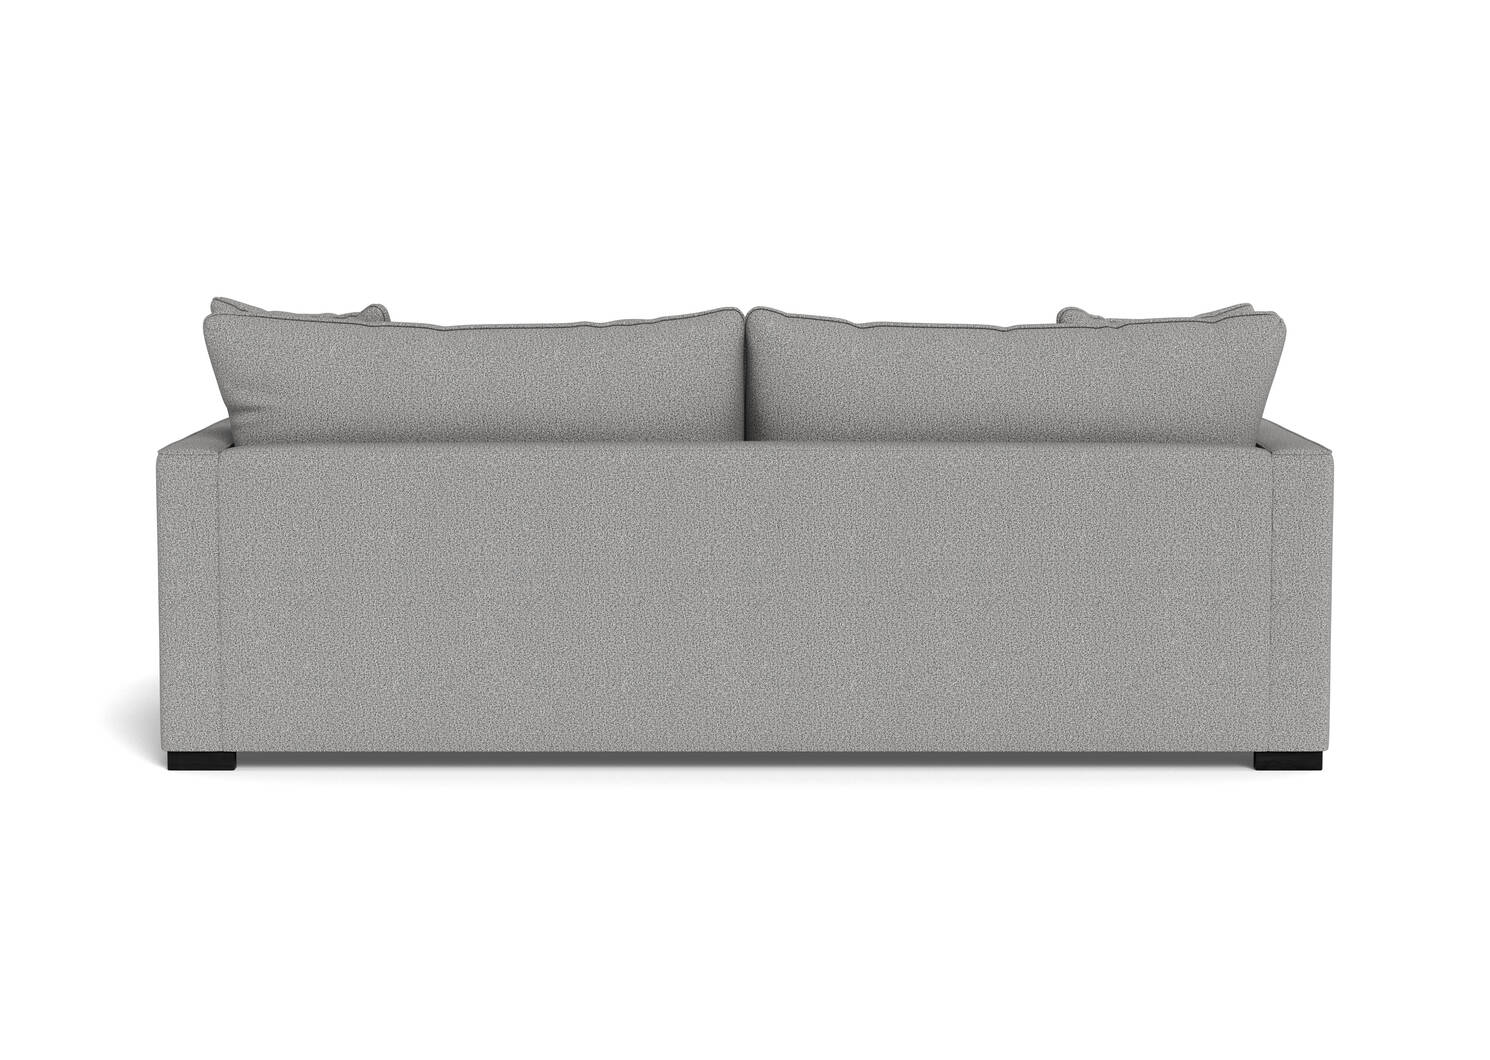 Sibley Custom Sofa Chaise